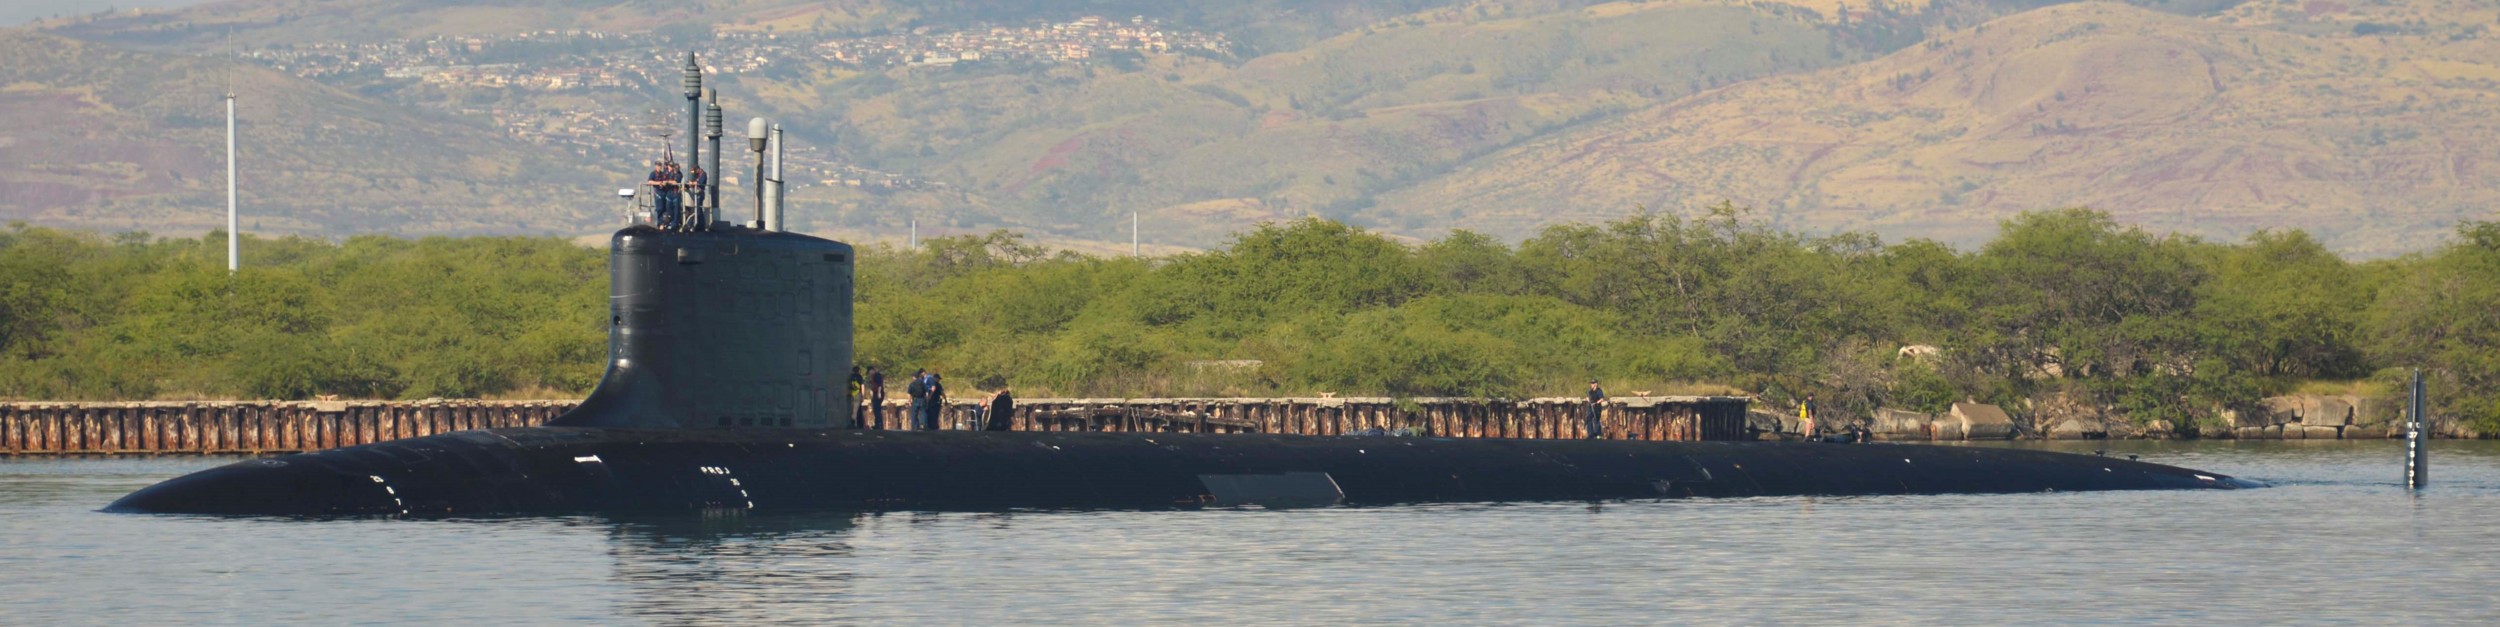 ssn-777 uss north carolina virginia class attack submarine us navy 2015 05 joint base pearl harbor hickam hawaii